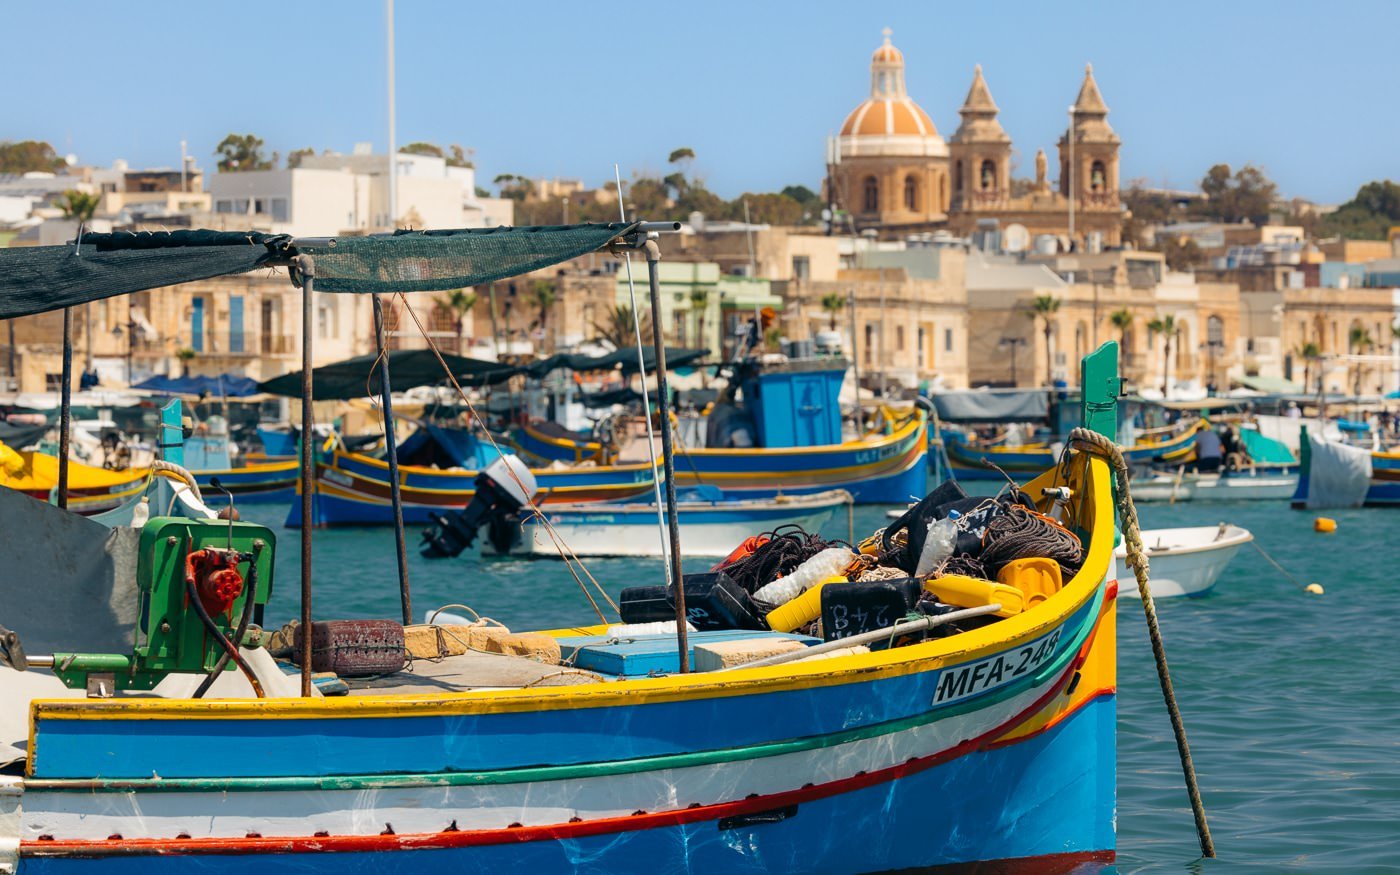 Marsaxlokk Malta Fishing Village with colorful boats